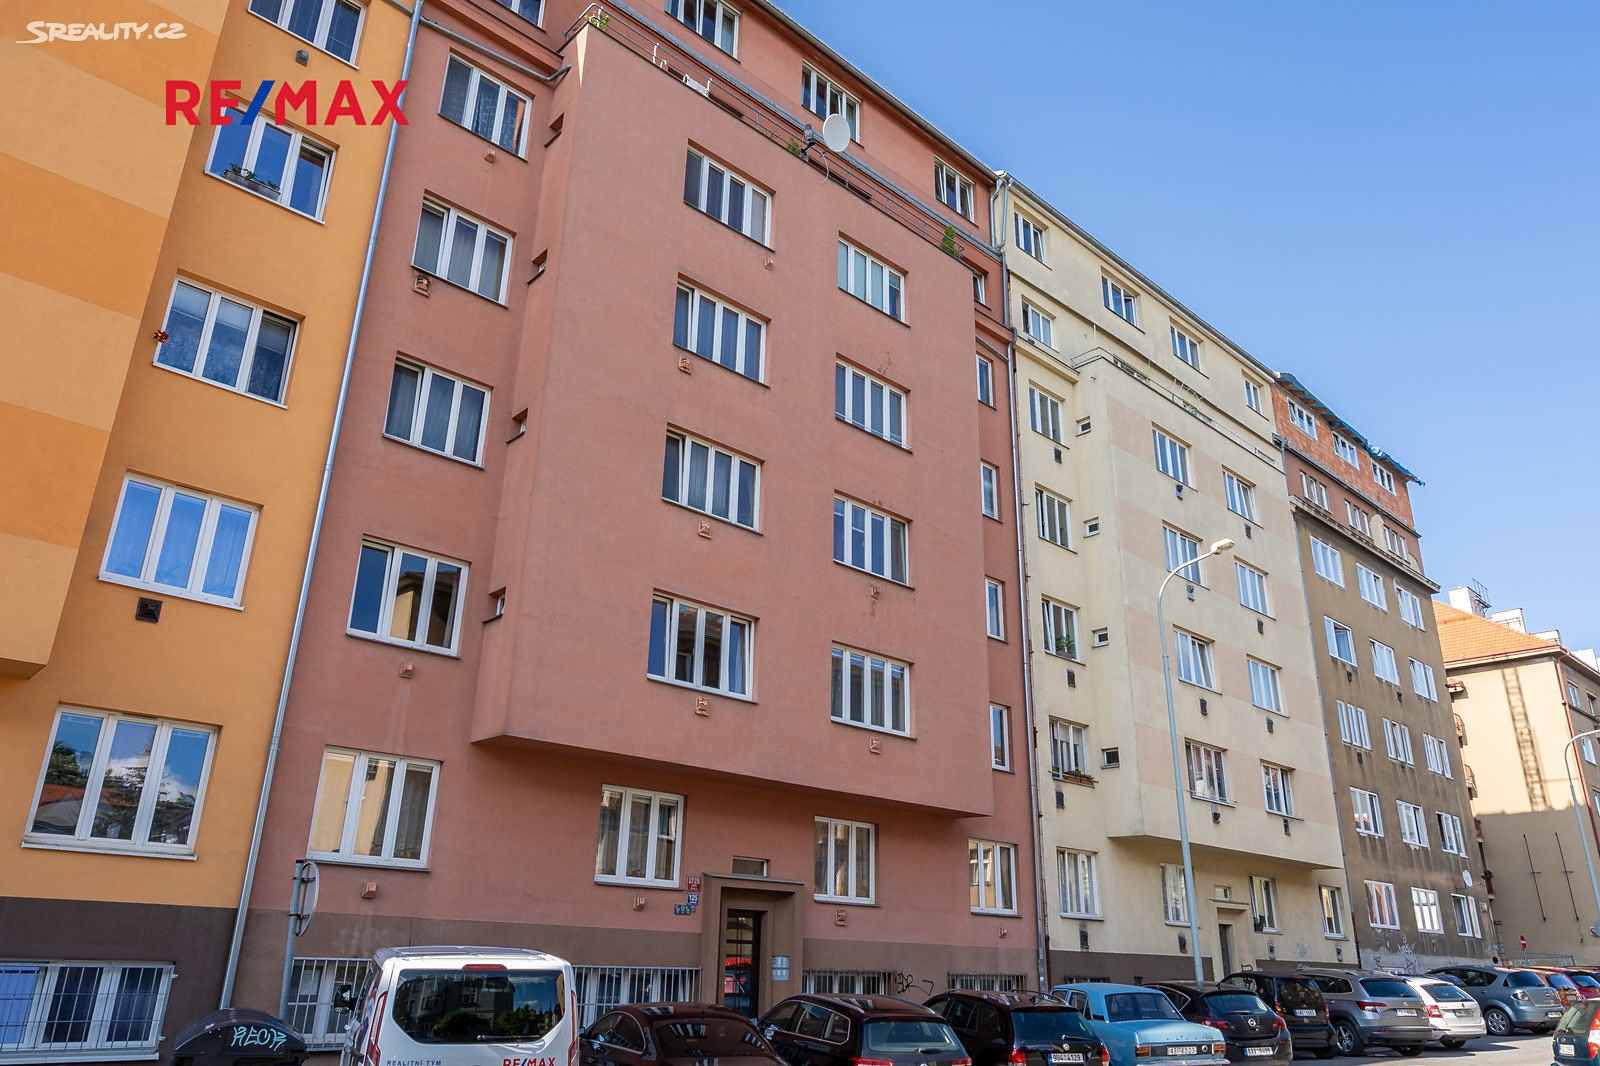 Prodej bytu 4+kk 116 m² (Mezonet), Jeseniova, Praha 3 - Žižkov